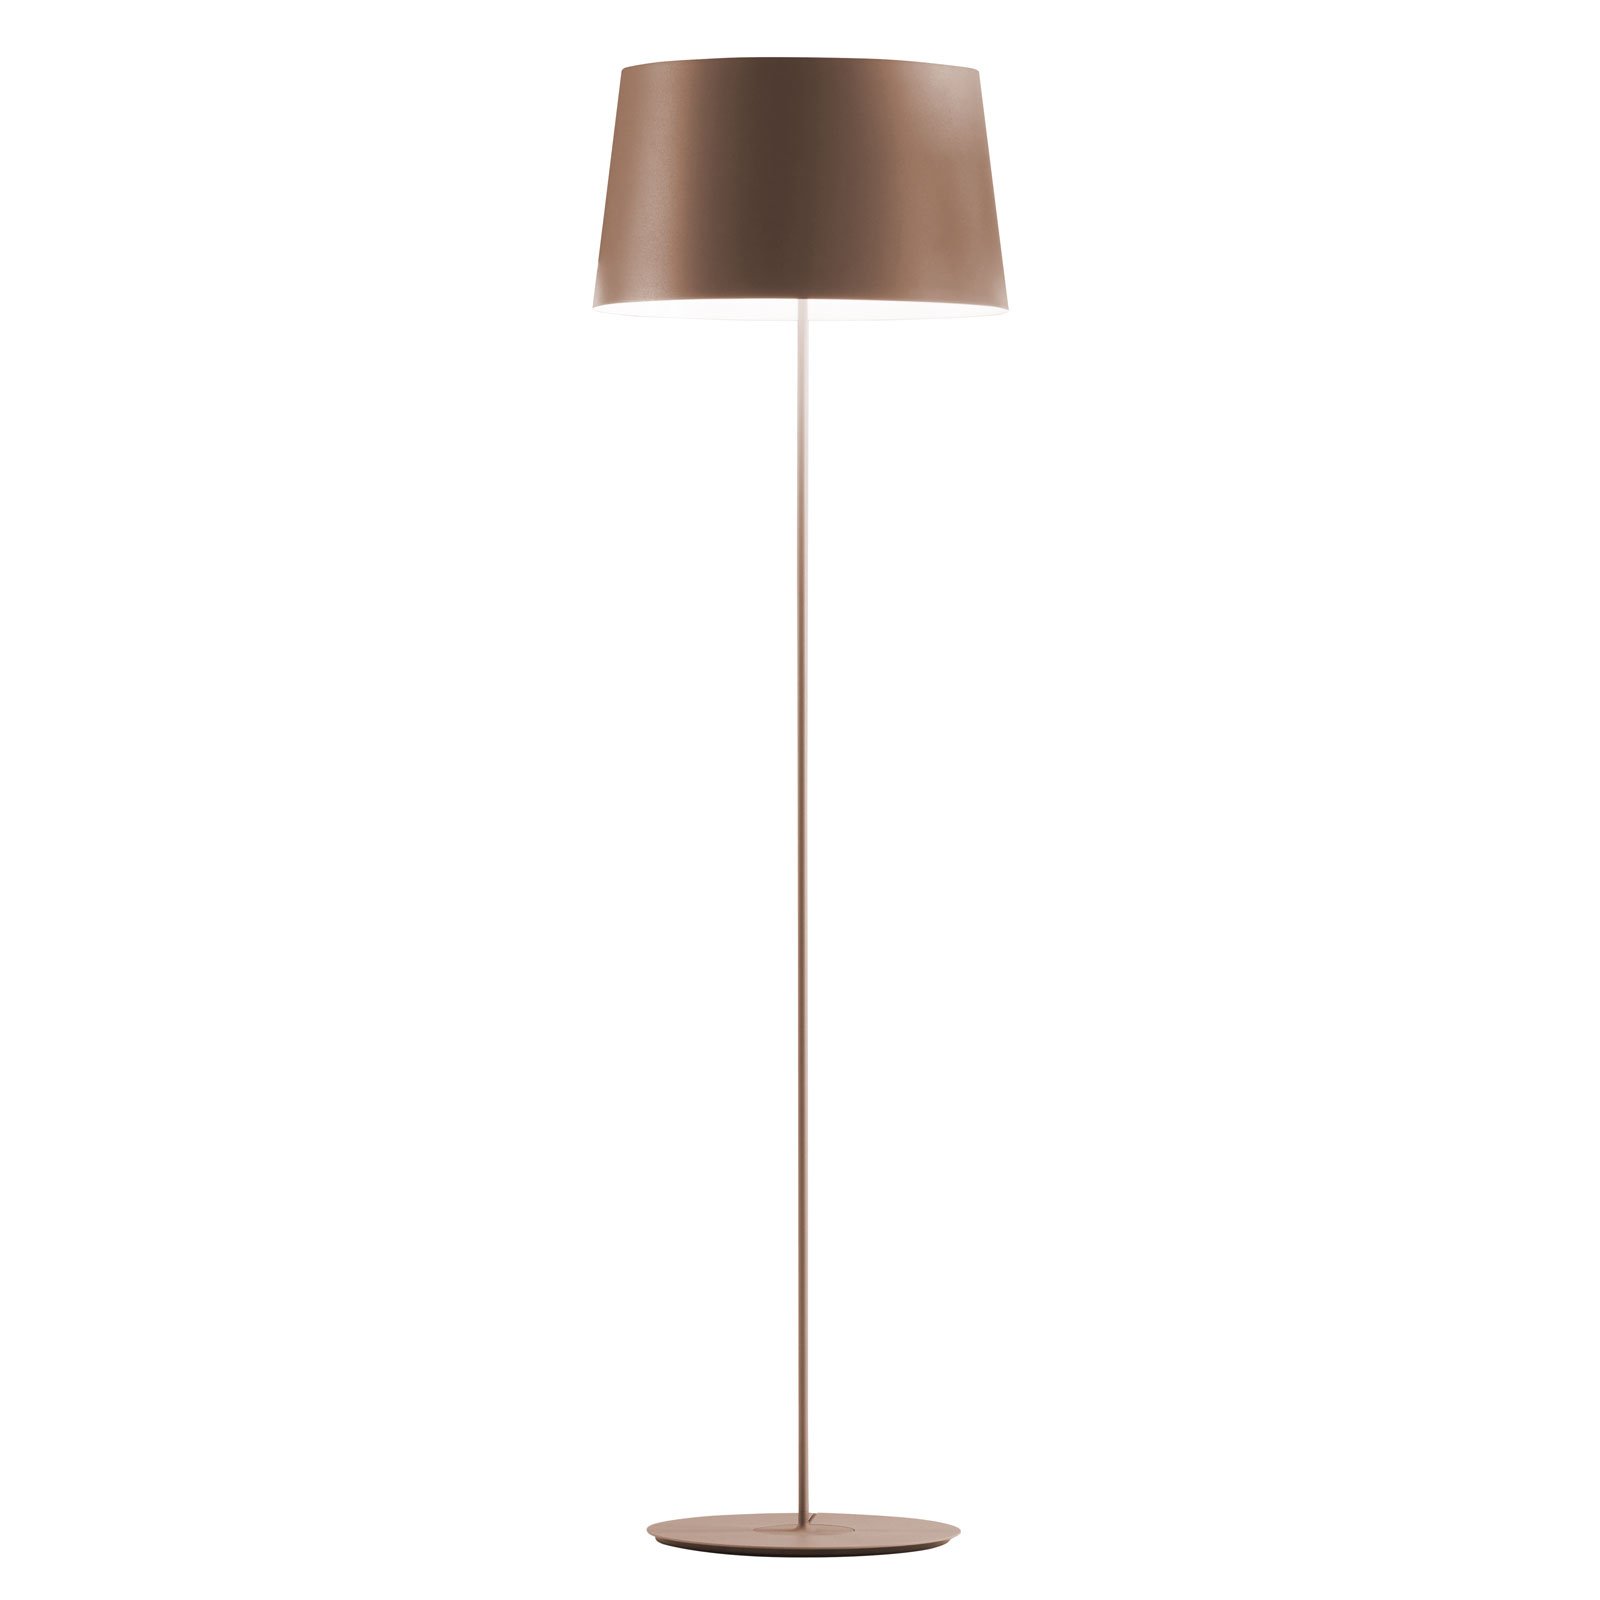 Vibia Warm 4906 designer floor lamp, brown